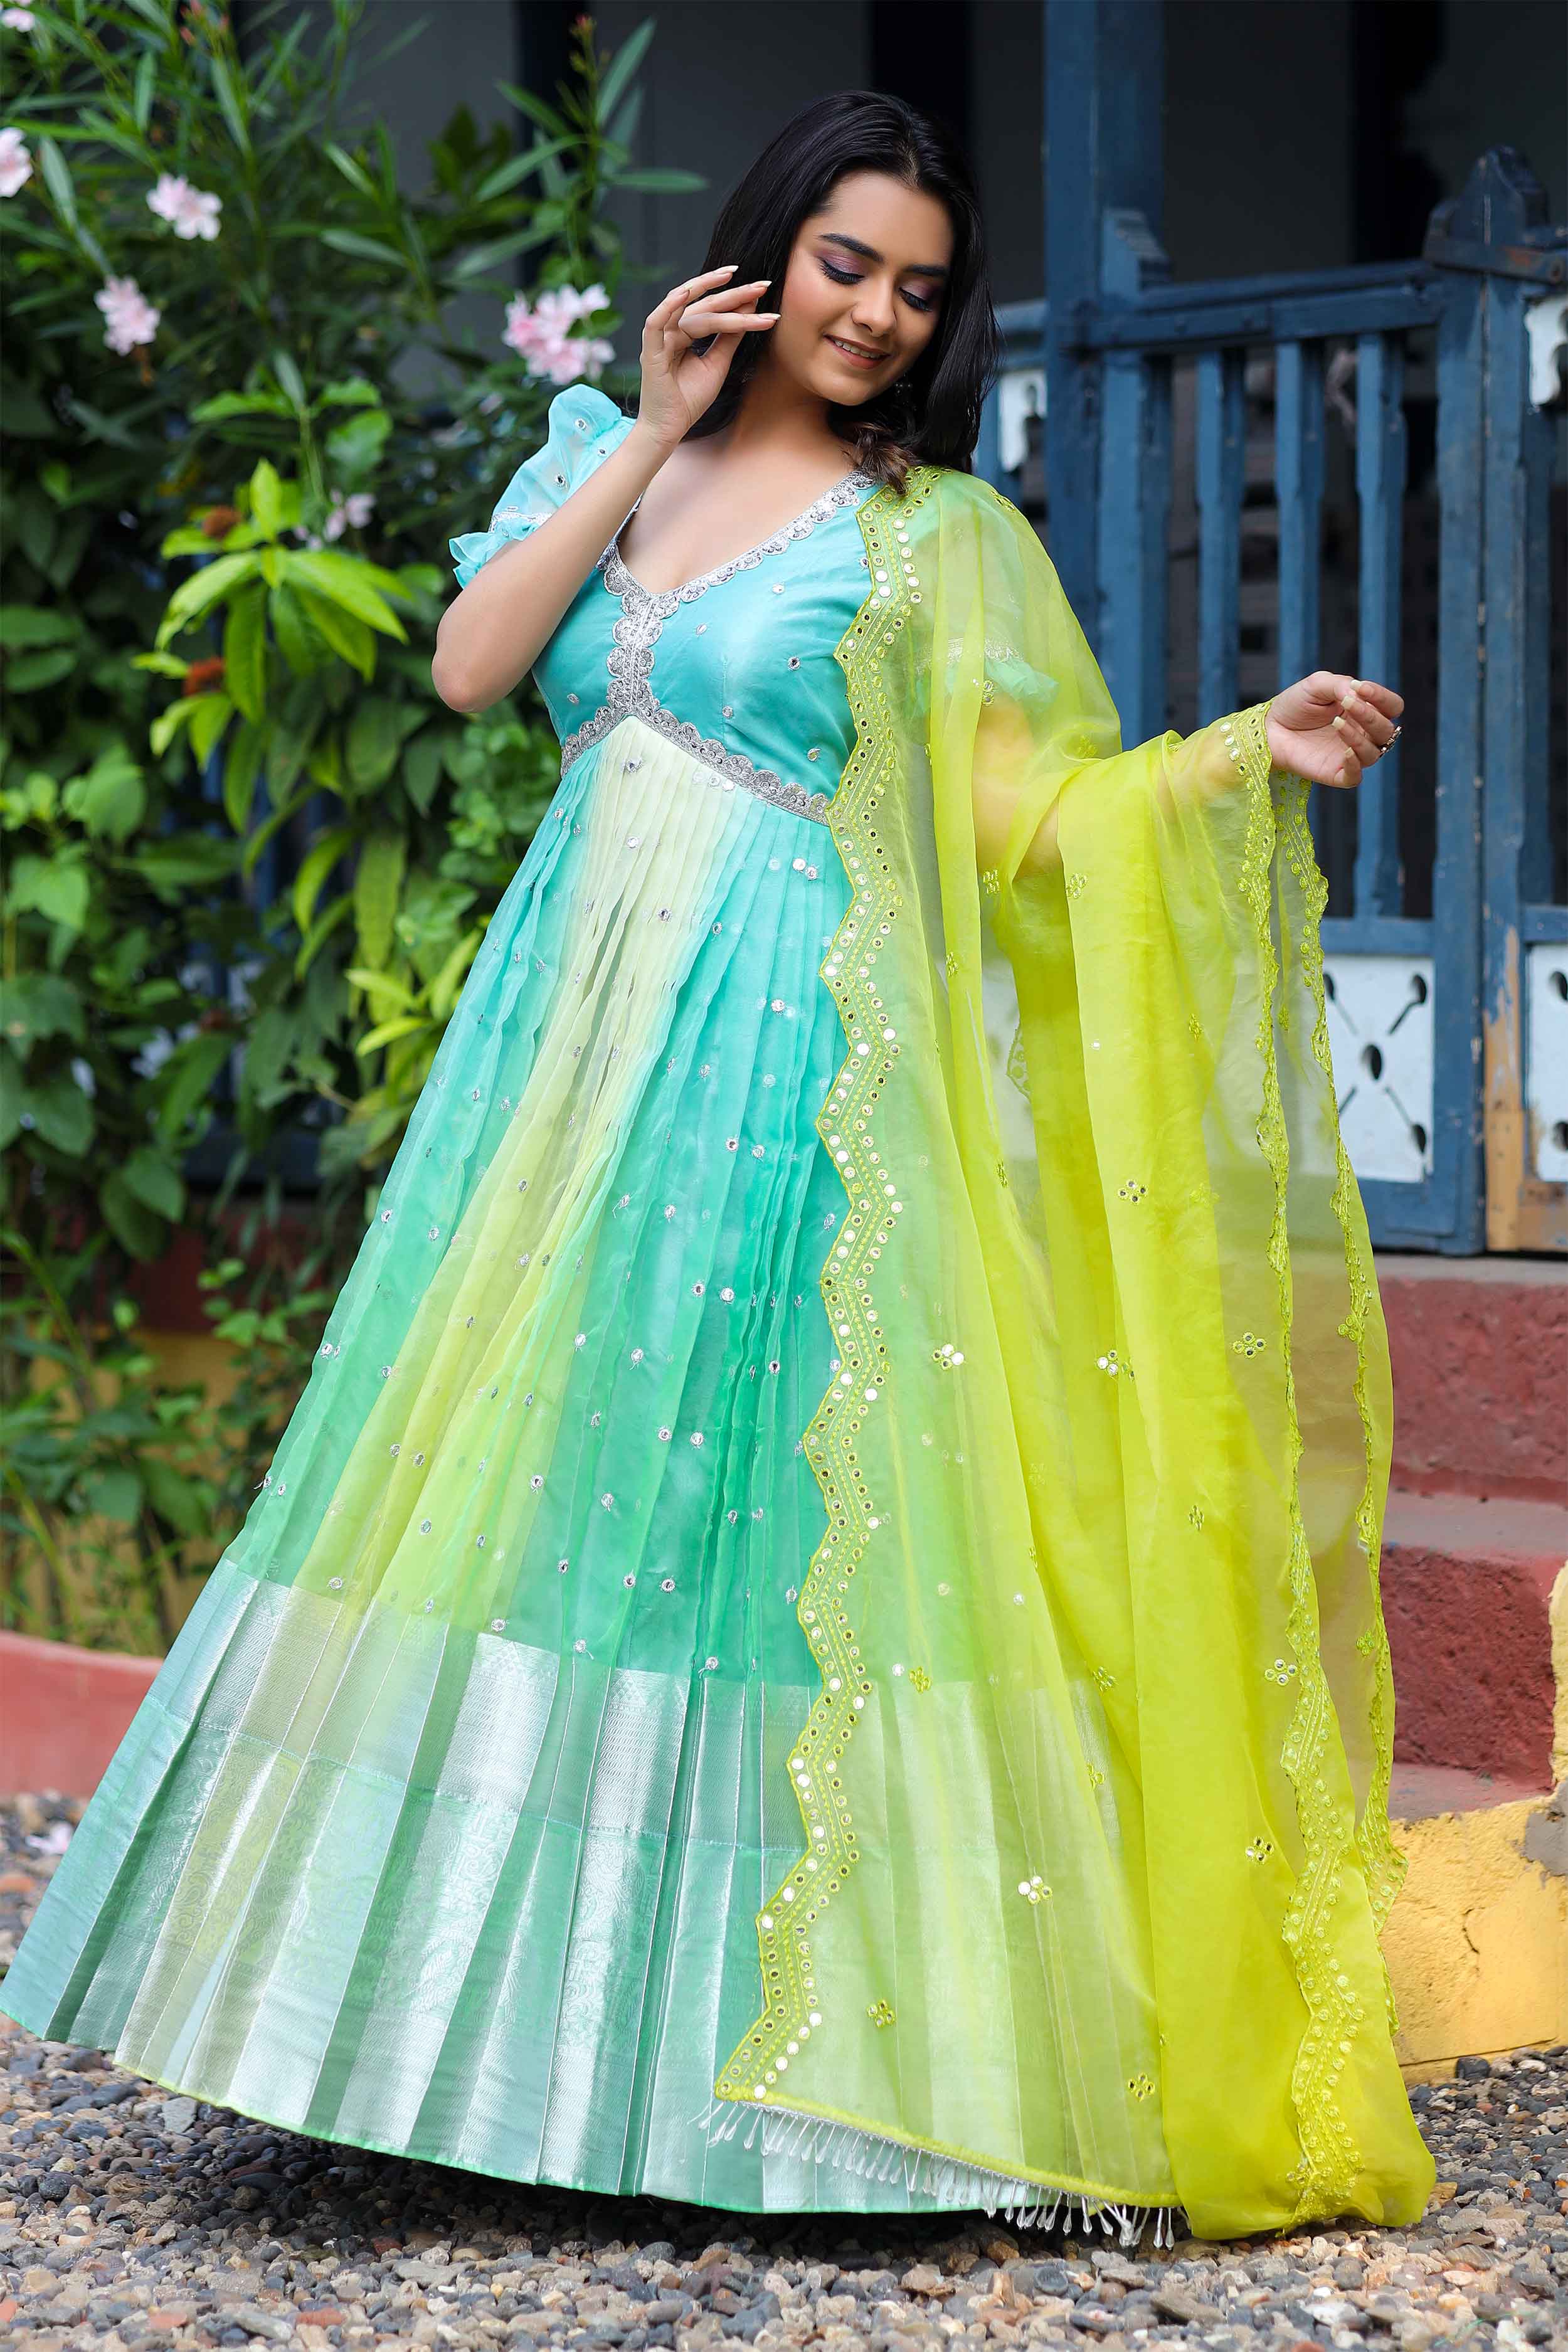 a woman in blue Anarkali dress with green dupatta